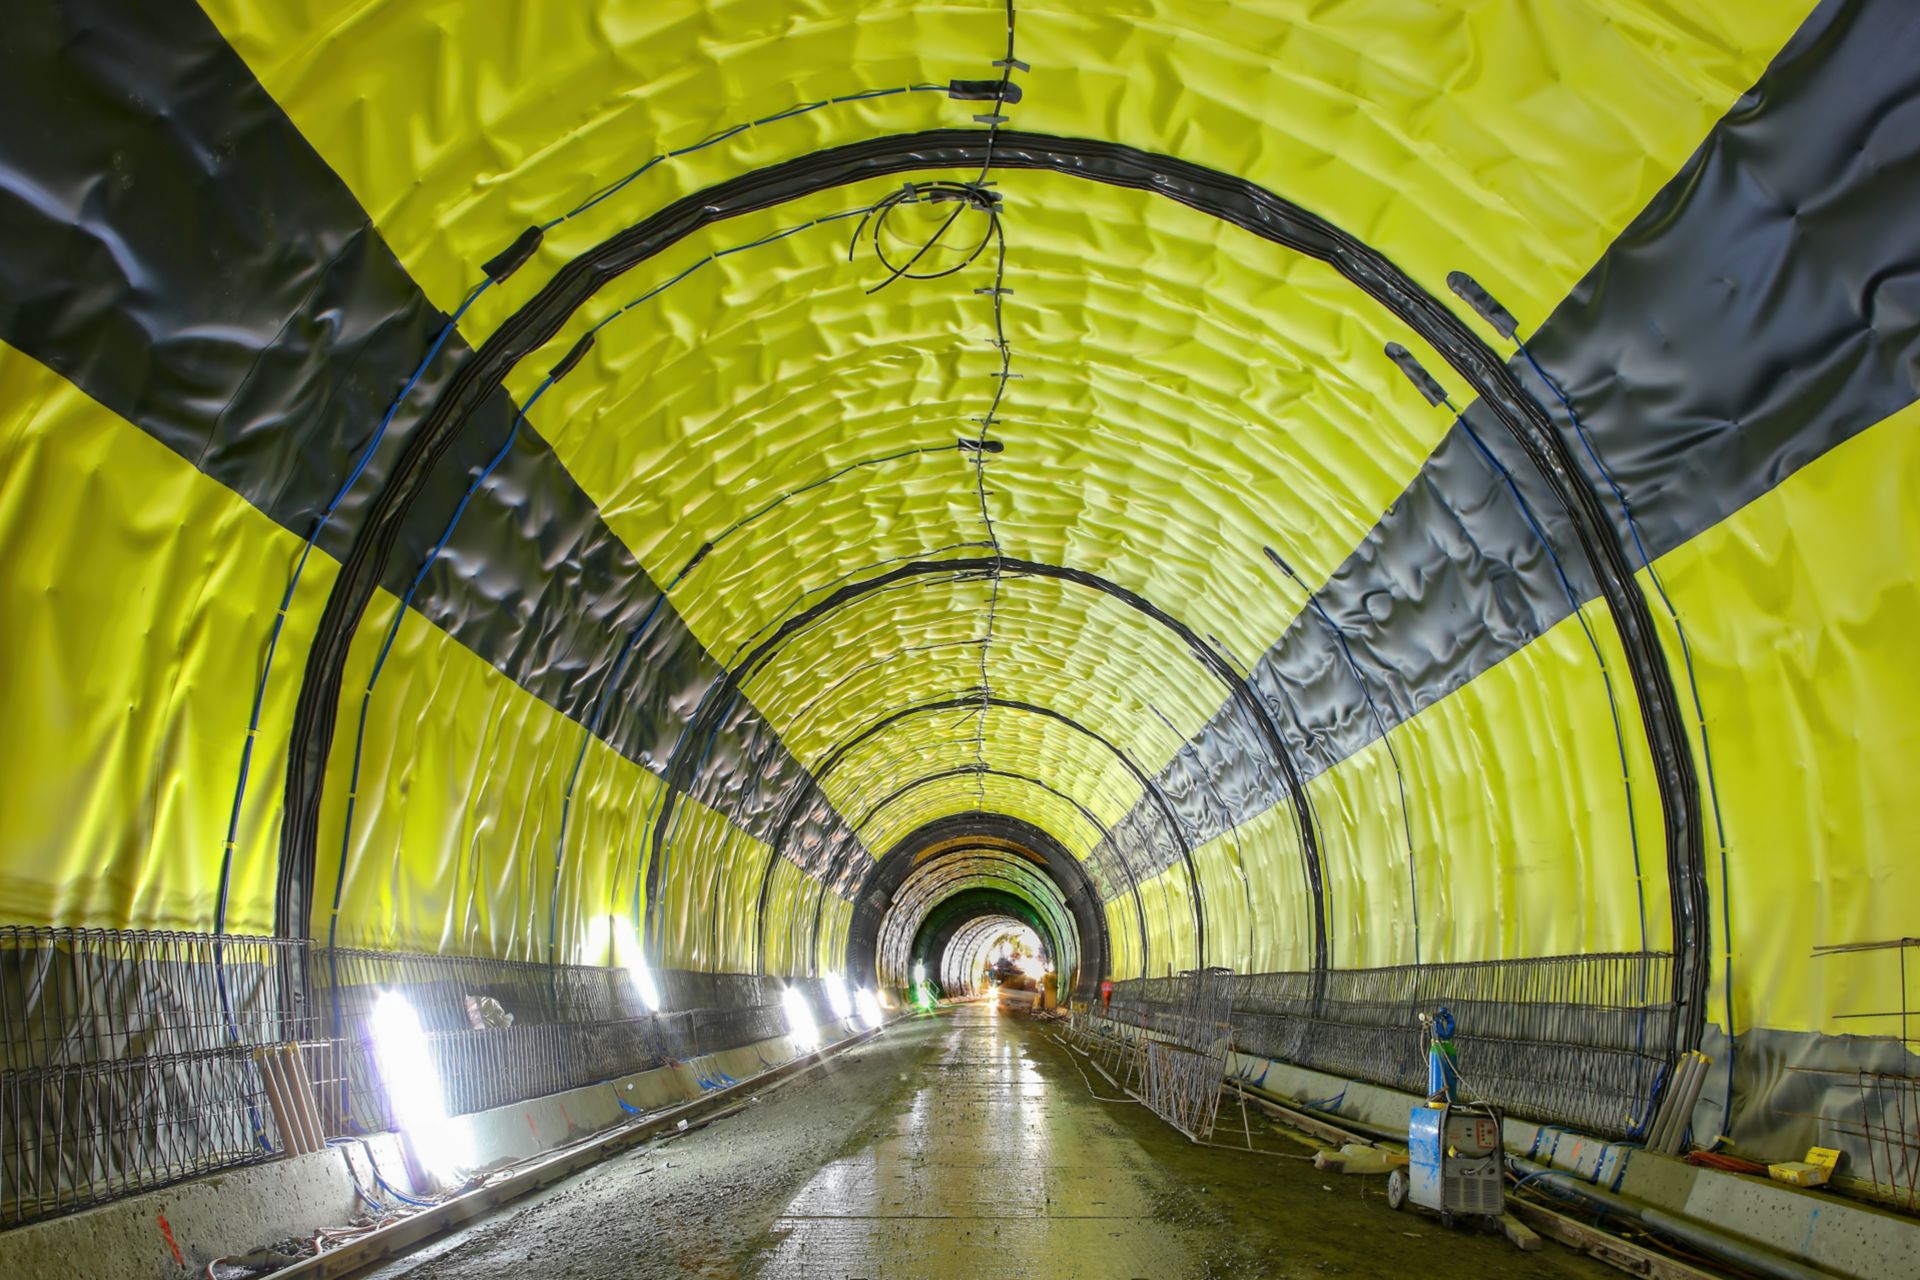 Sikaplan sheet waterproofing system protecting Visp tunnel in Switzerland